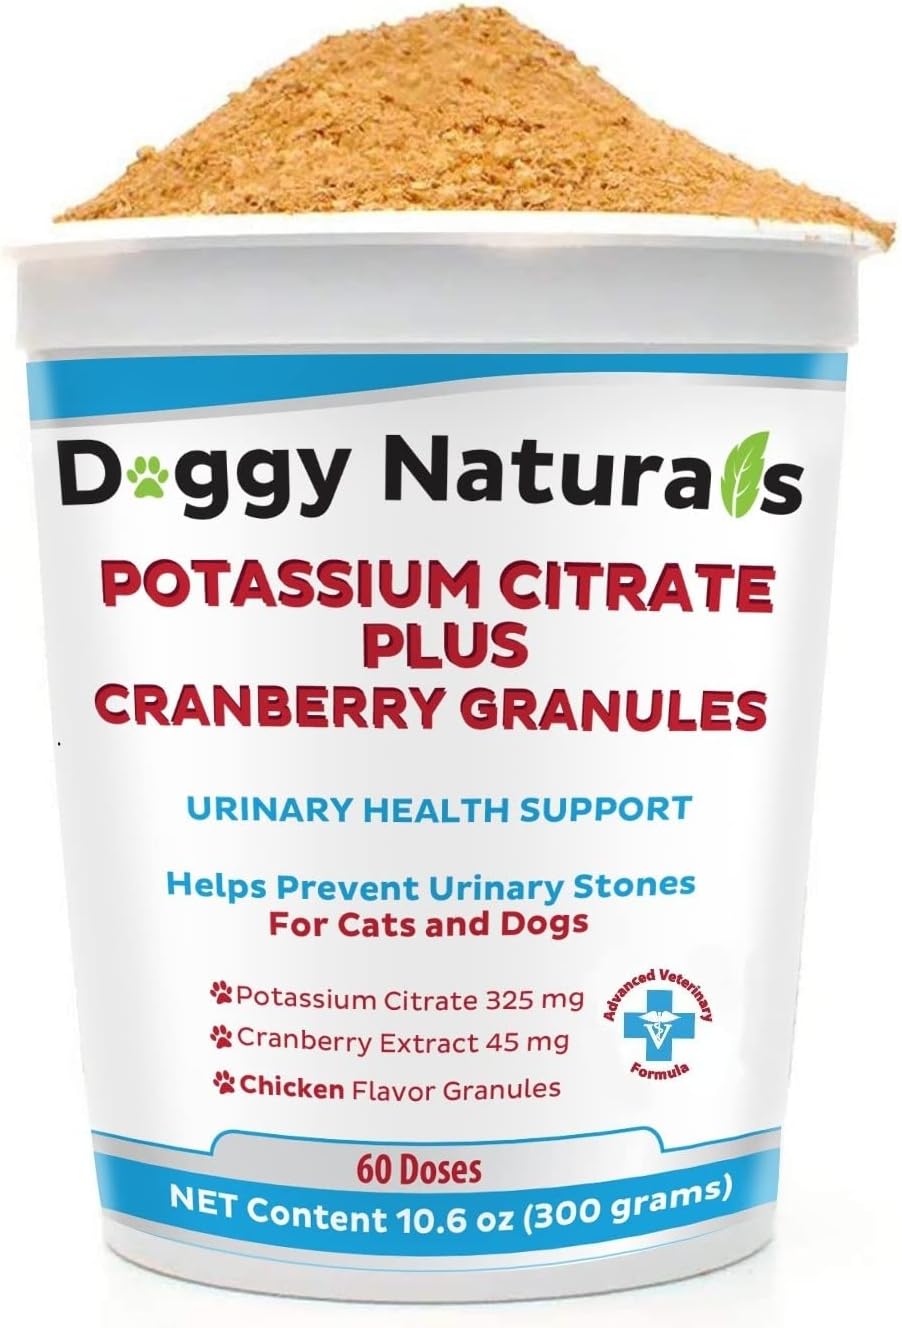 Doggy Naturals Potassium Citrate Plus Cranberry Granules